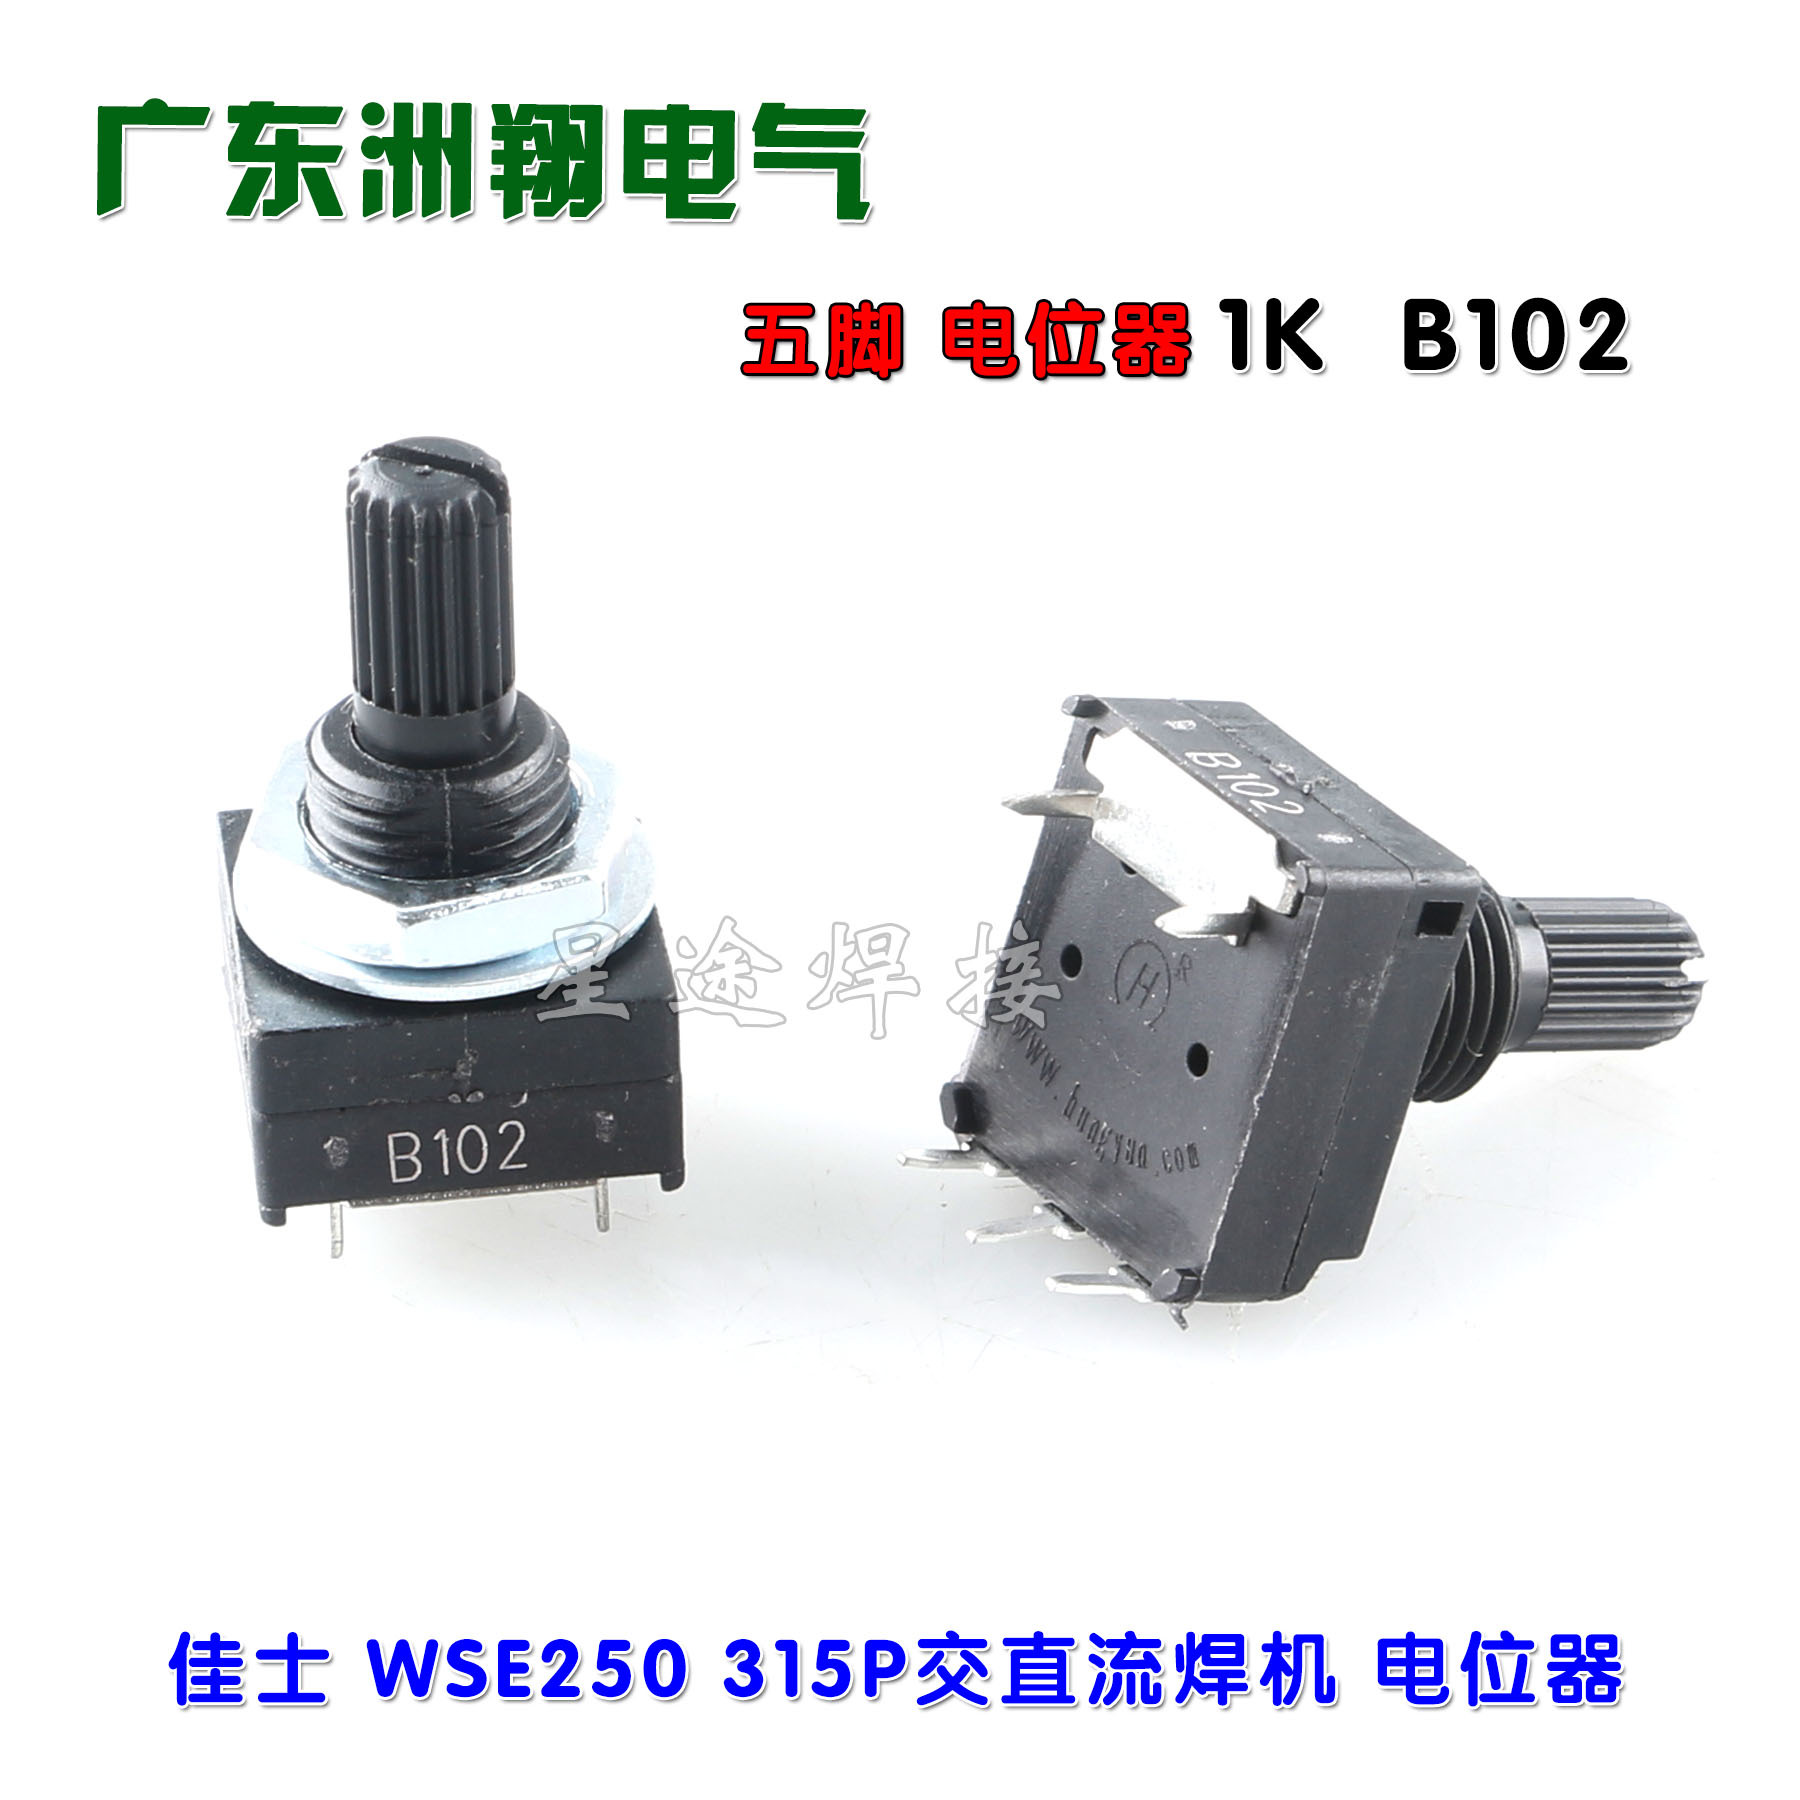 B1K B102 5脚电位器 瑞凌佳士调电流开关焊接式 焊机控制面板常用